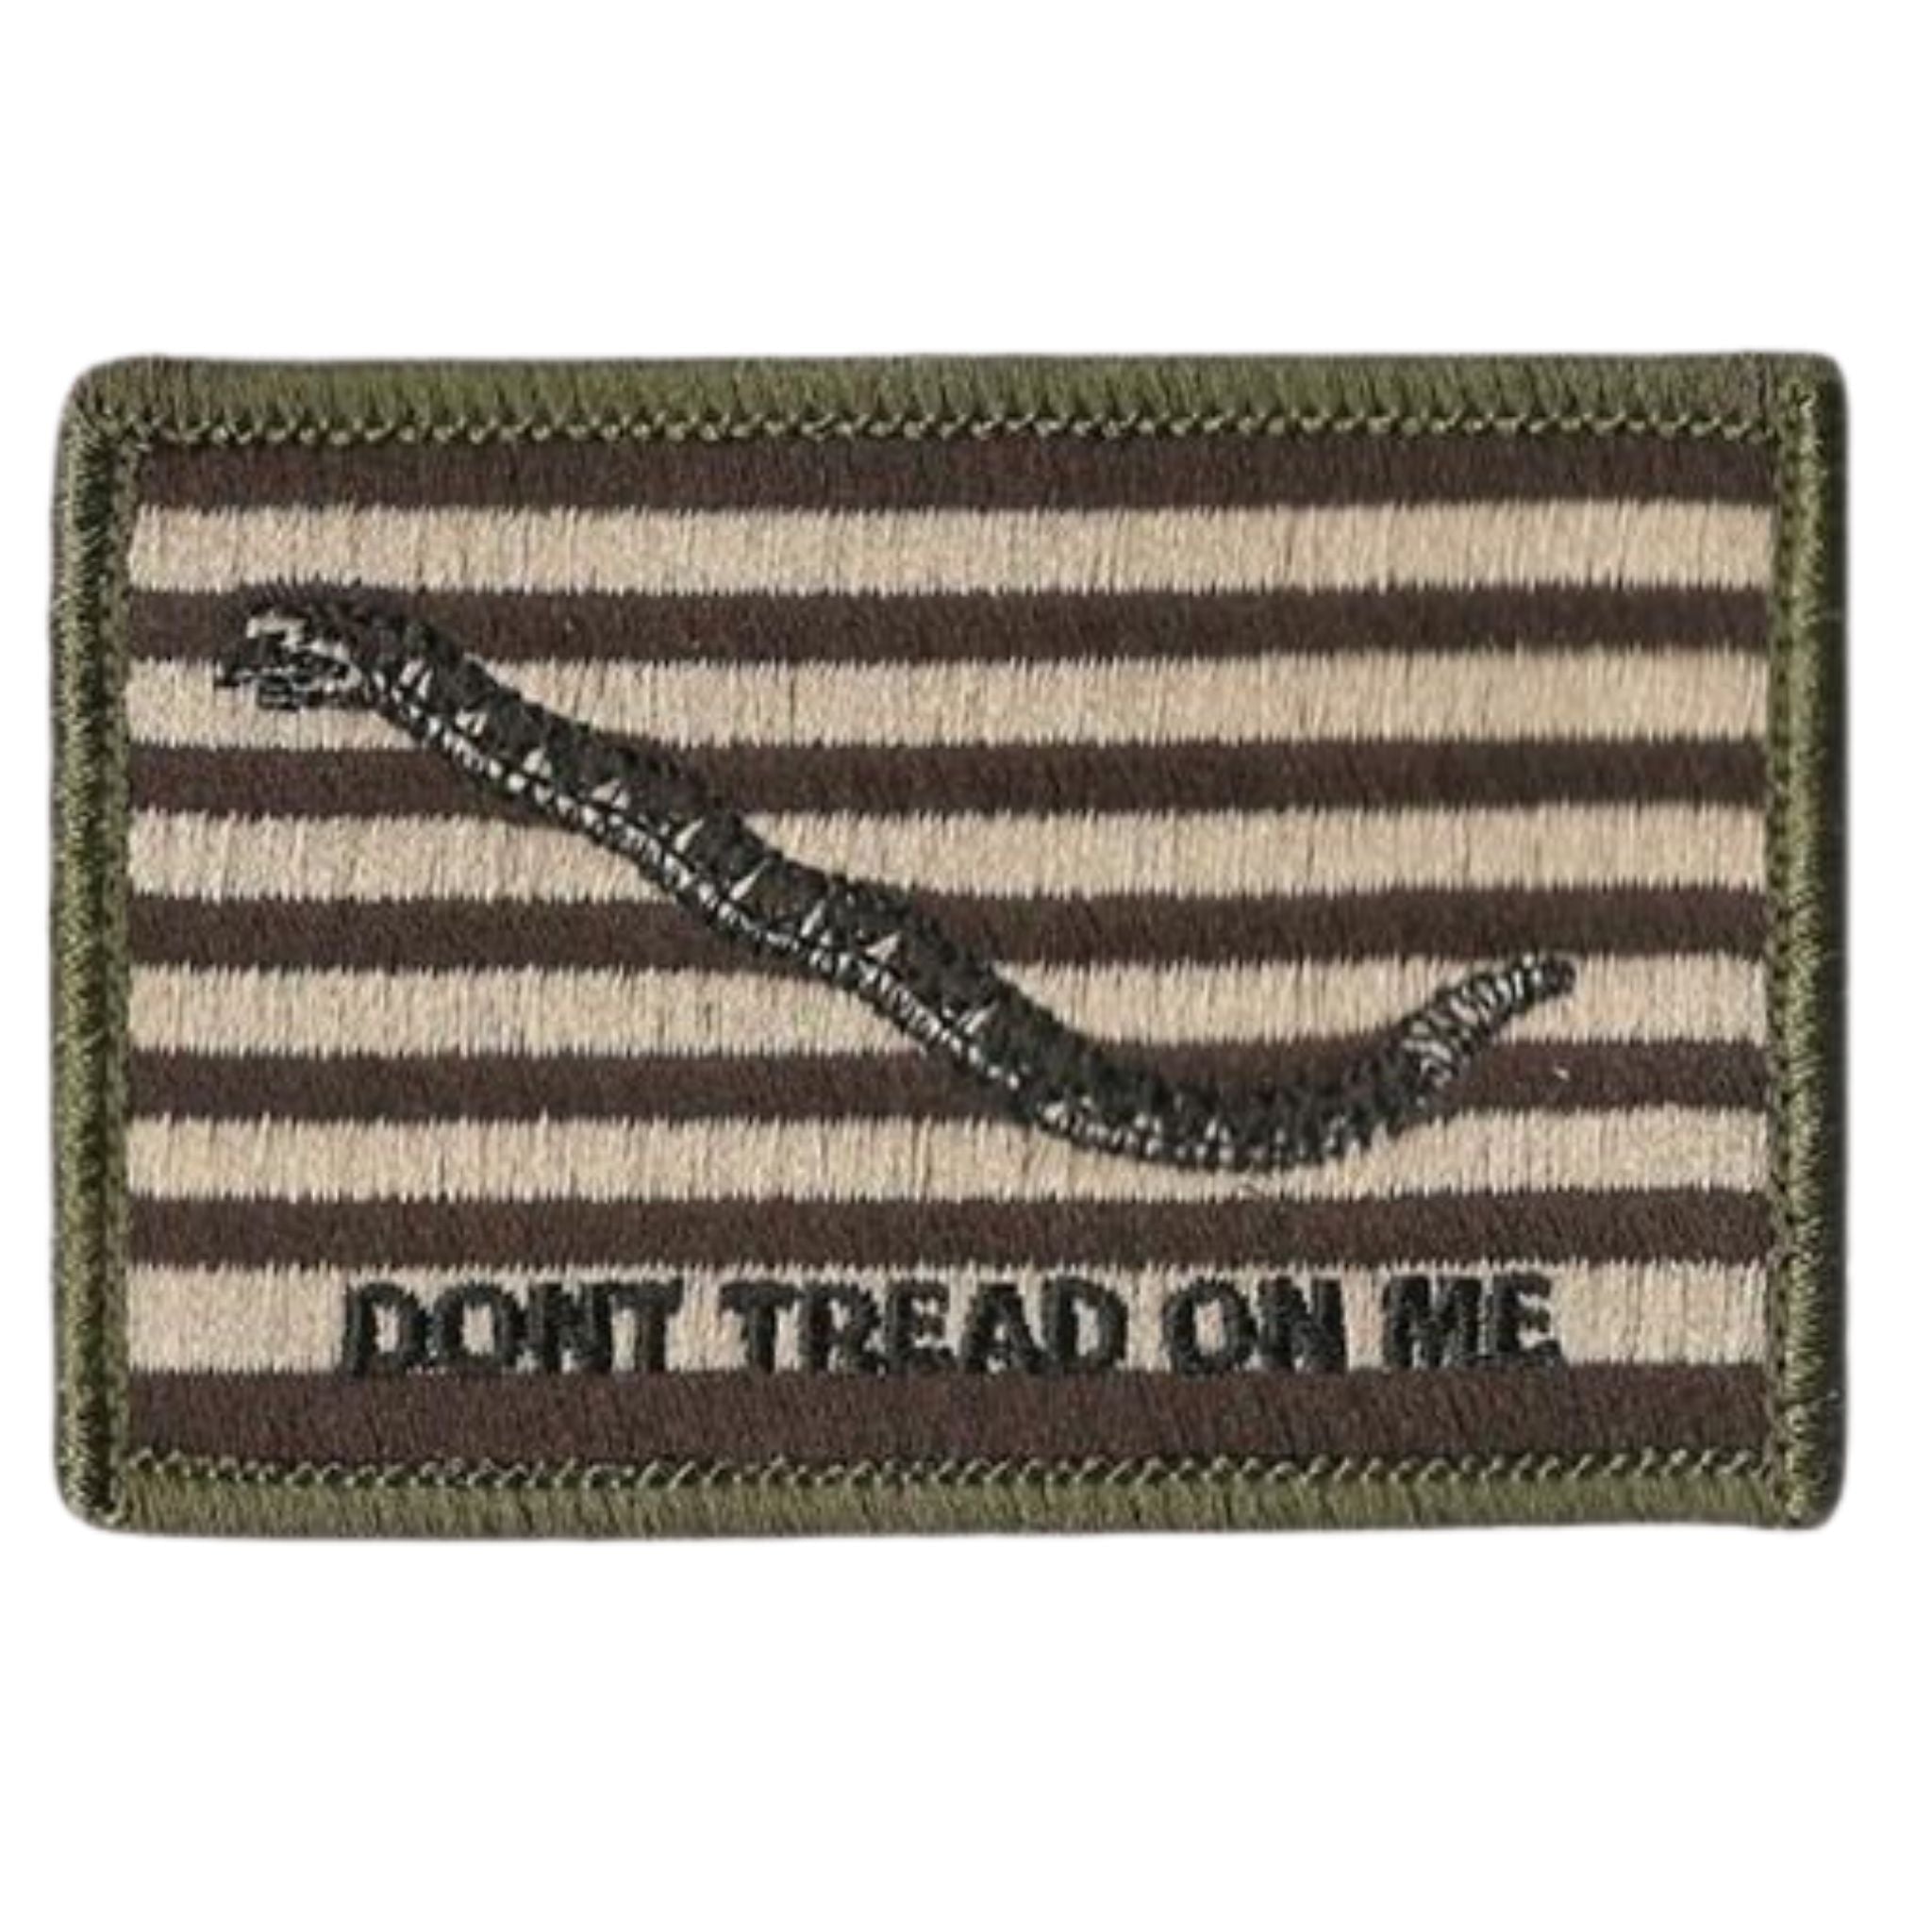 Navy Jack- Don't Tread on Me Patch - Multitan